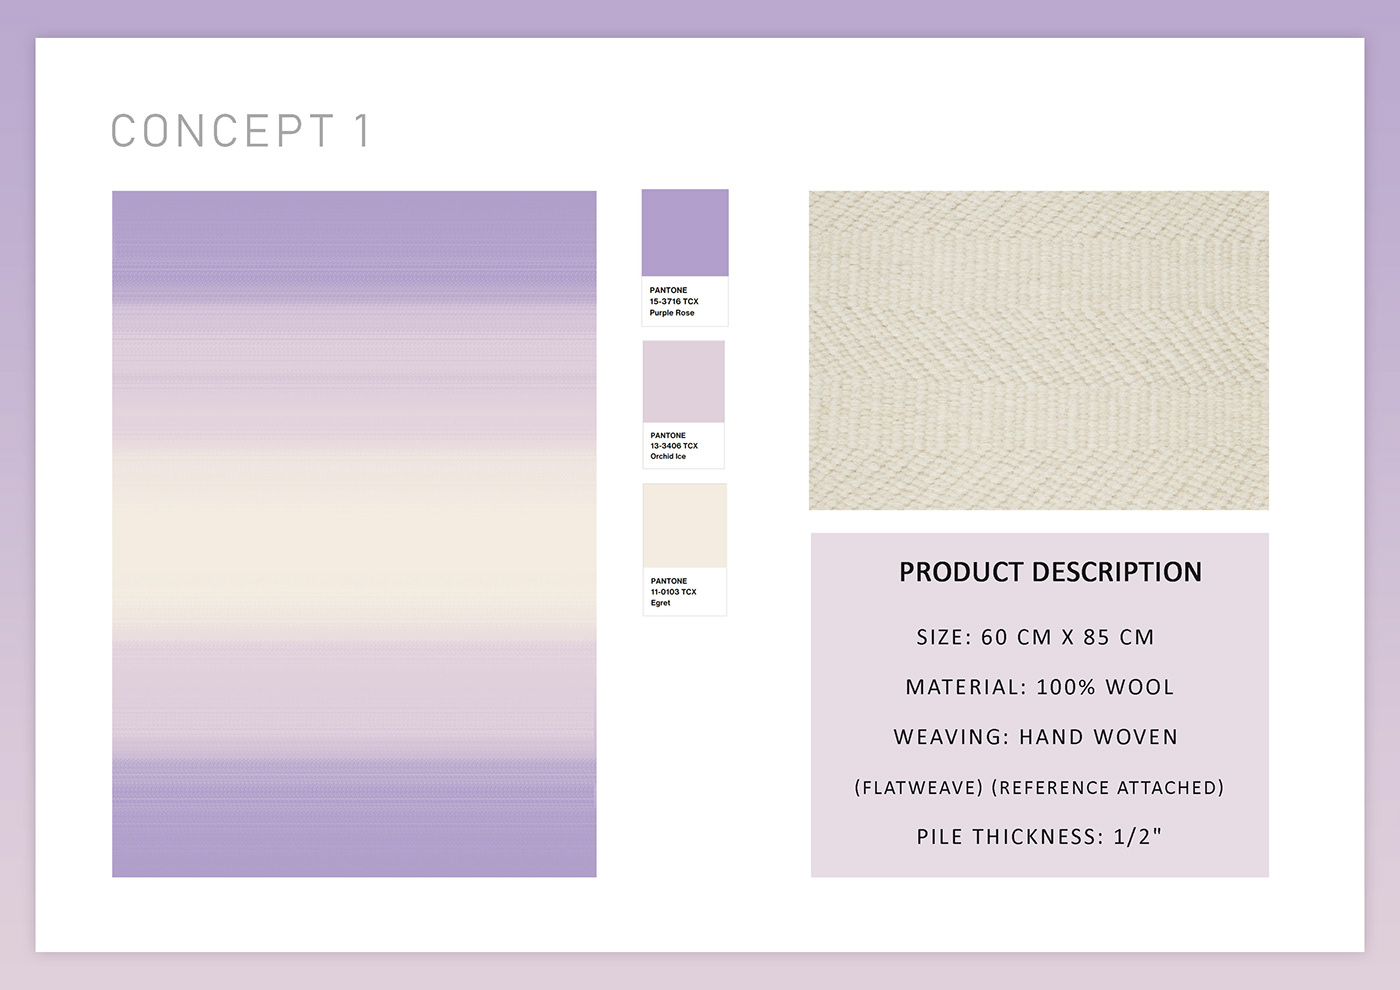 design home decor interiors rugs textile